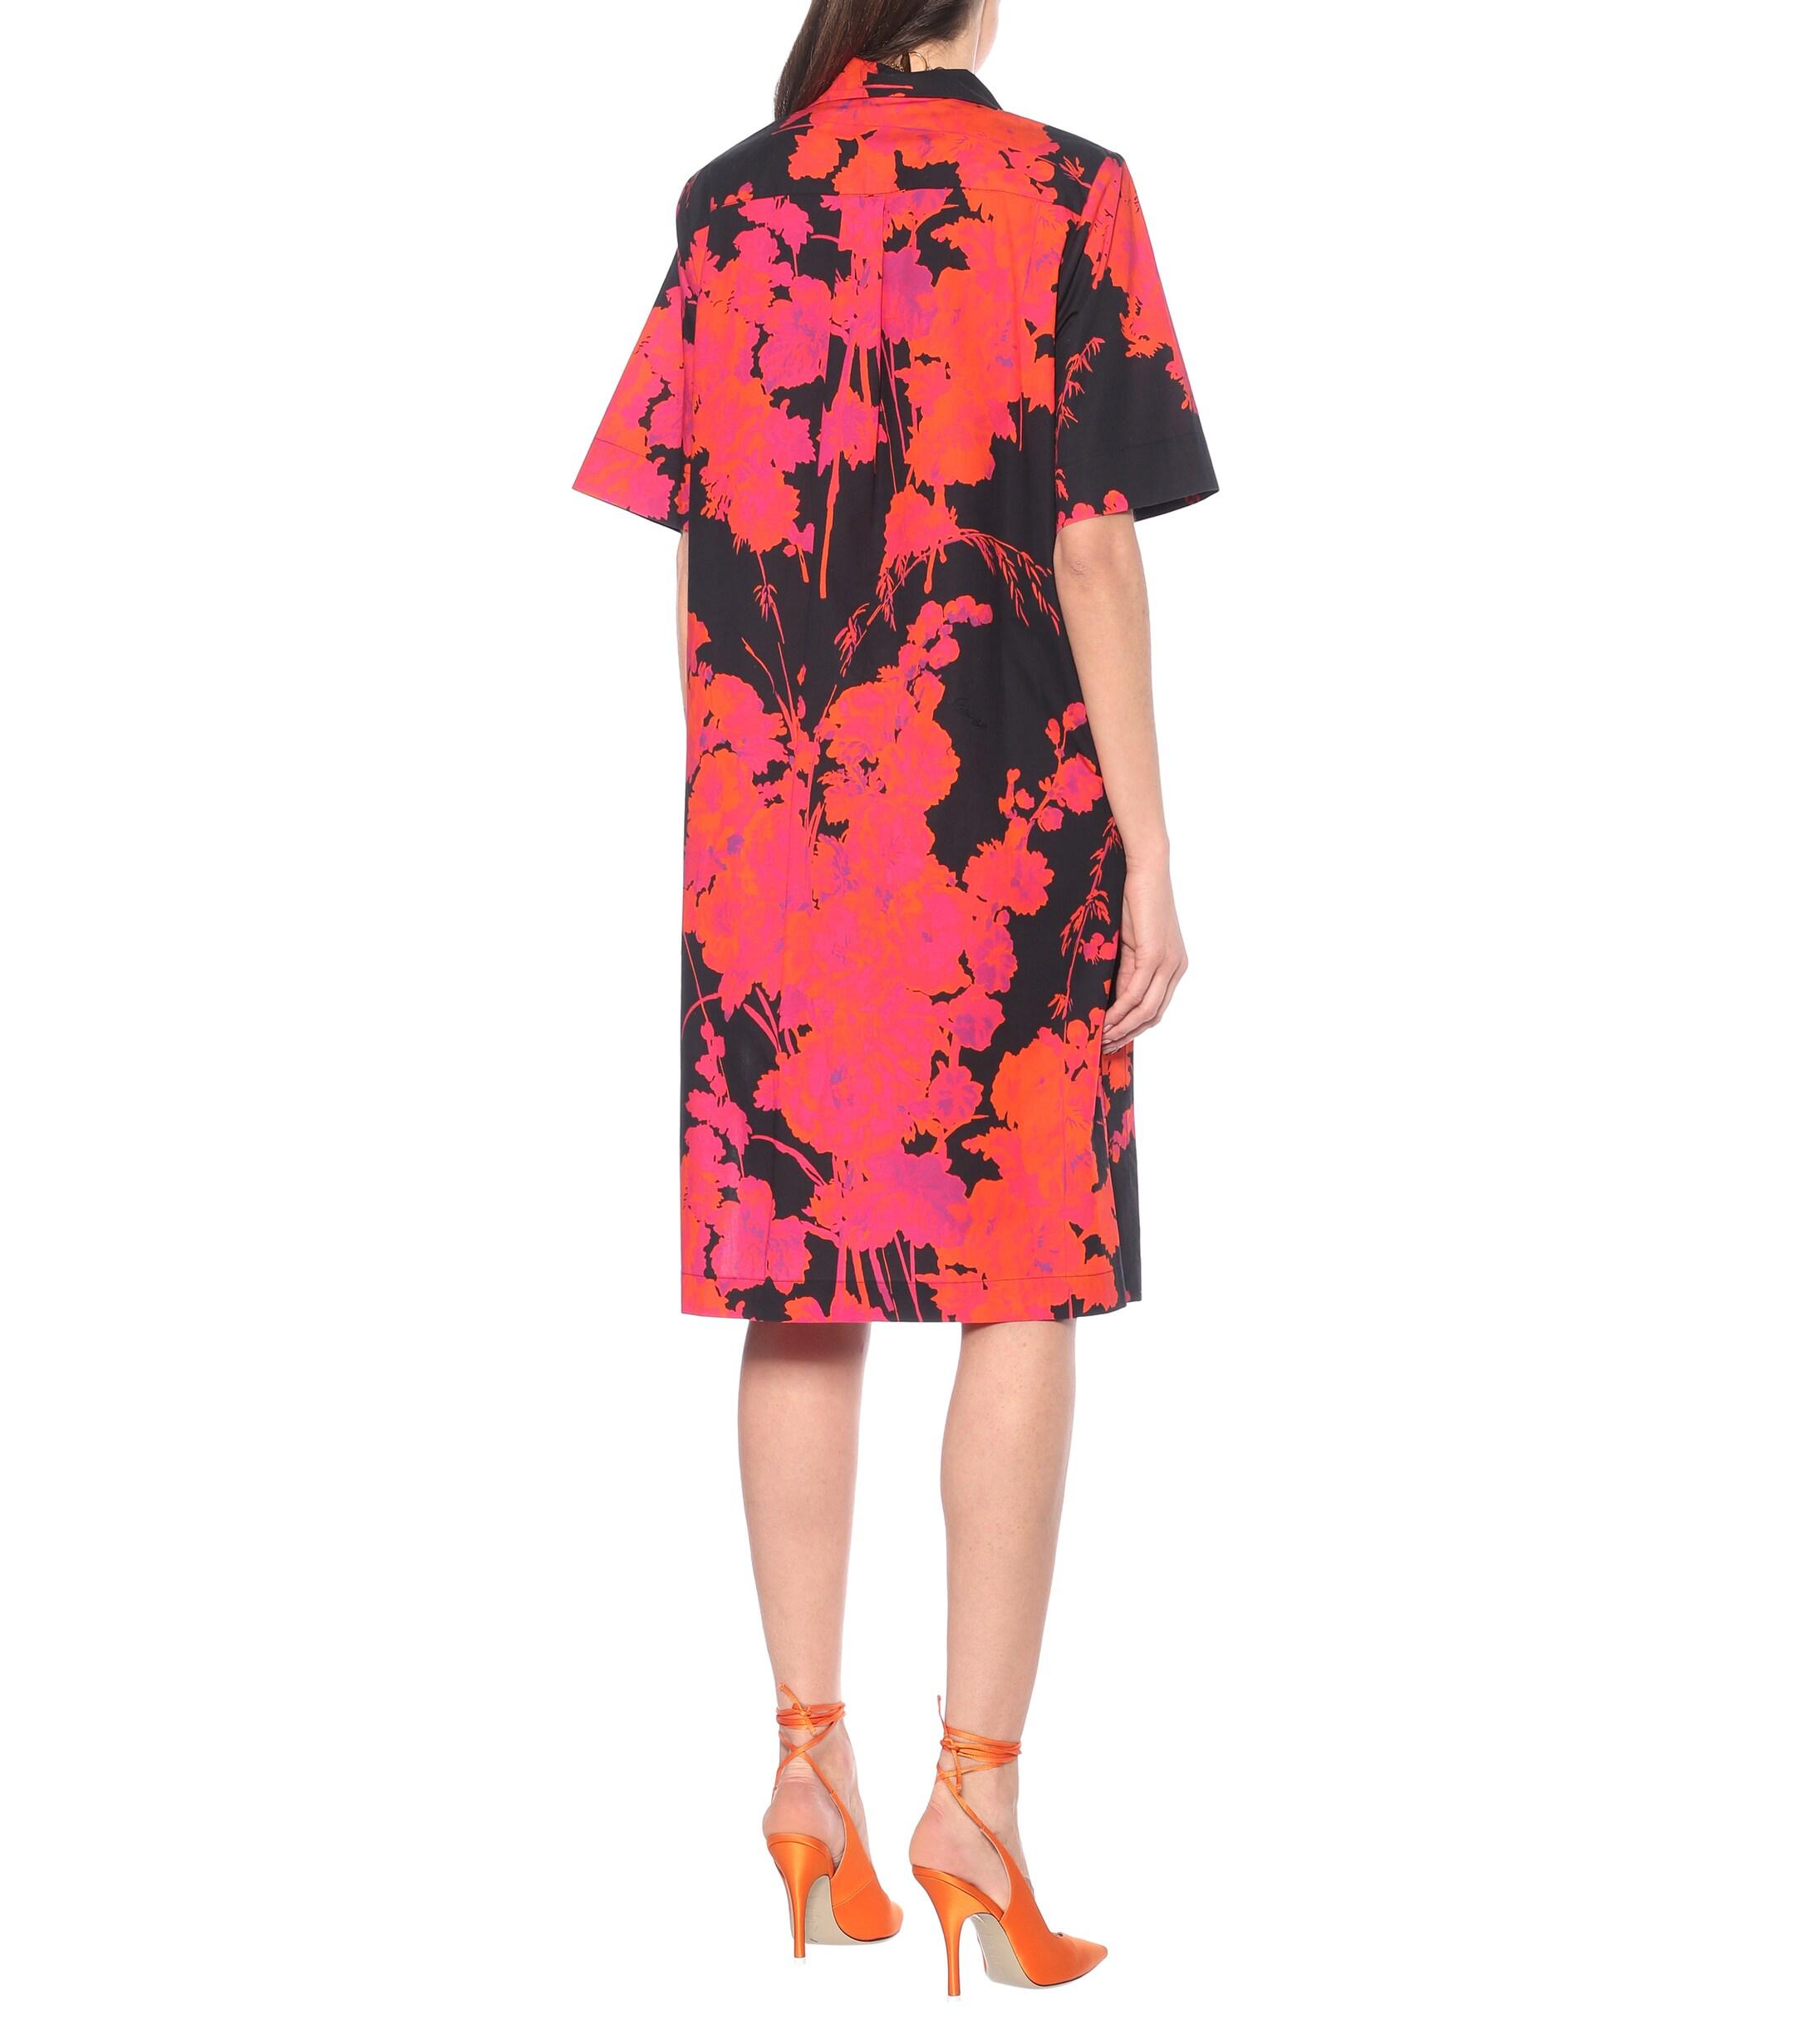 Dries Van Noten Floral Cotton Shirt Dress in Red - Lyst